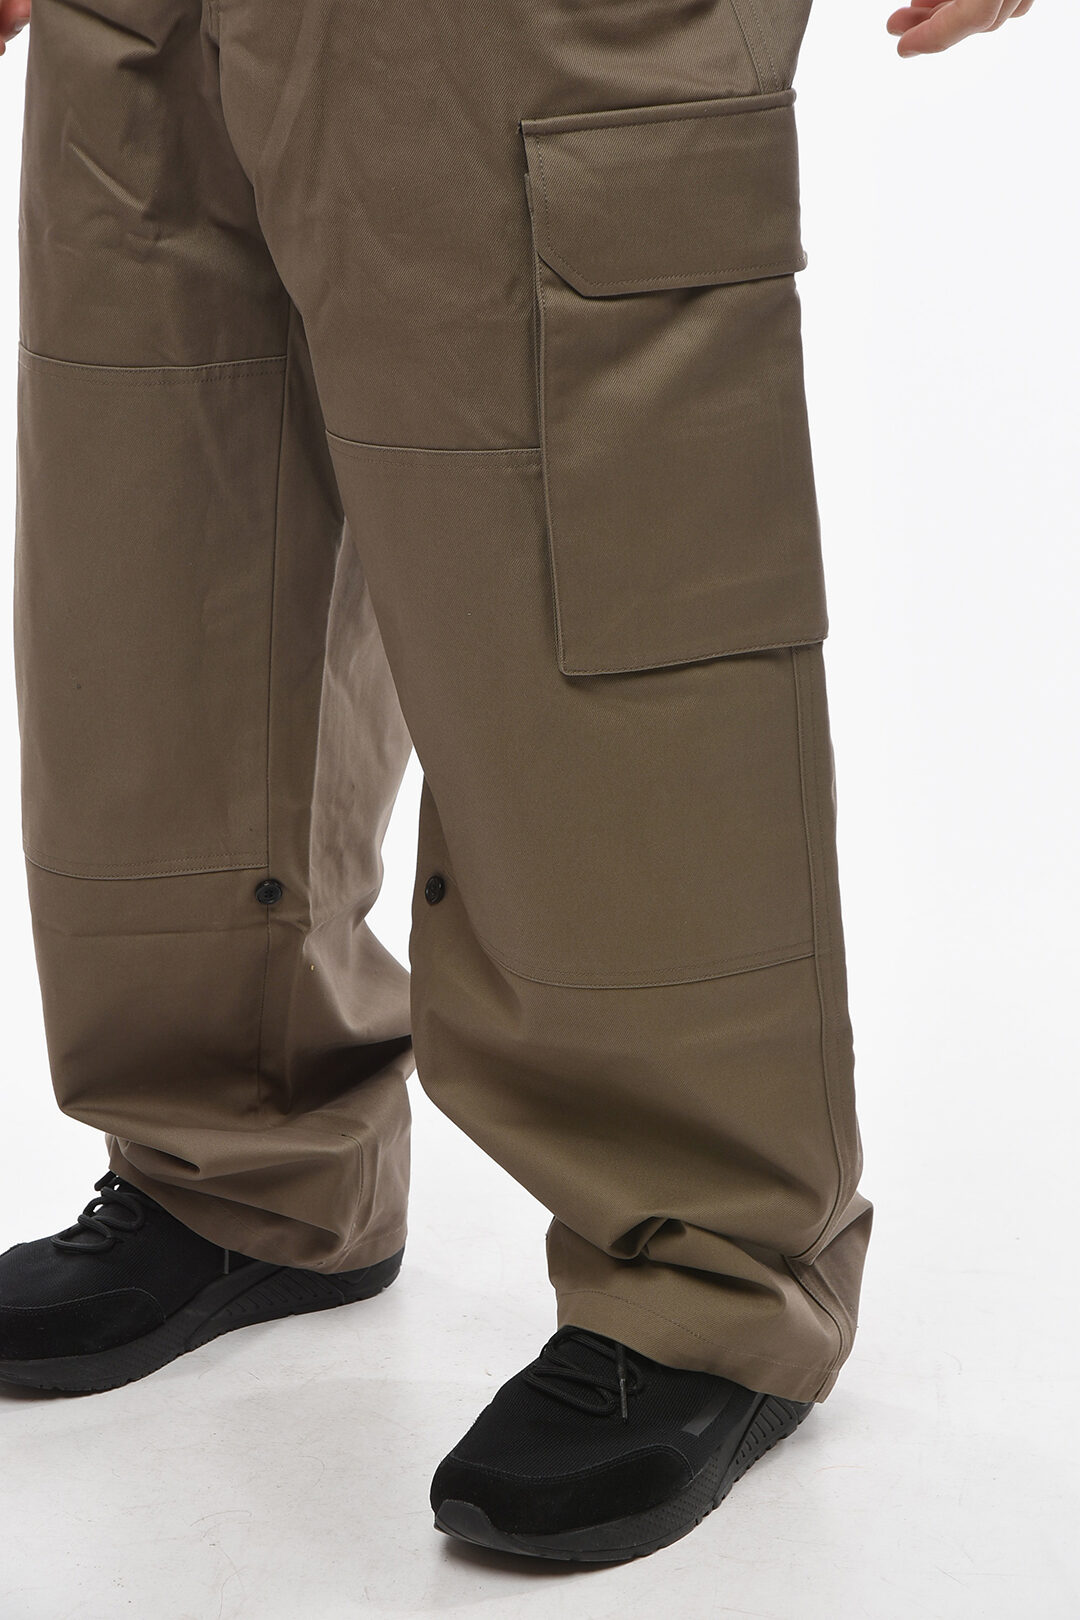 Elbeco Reflex Stretch Hidden Cargo Uniform Pant